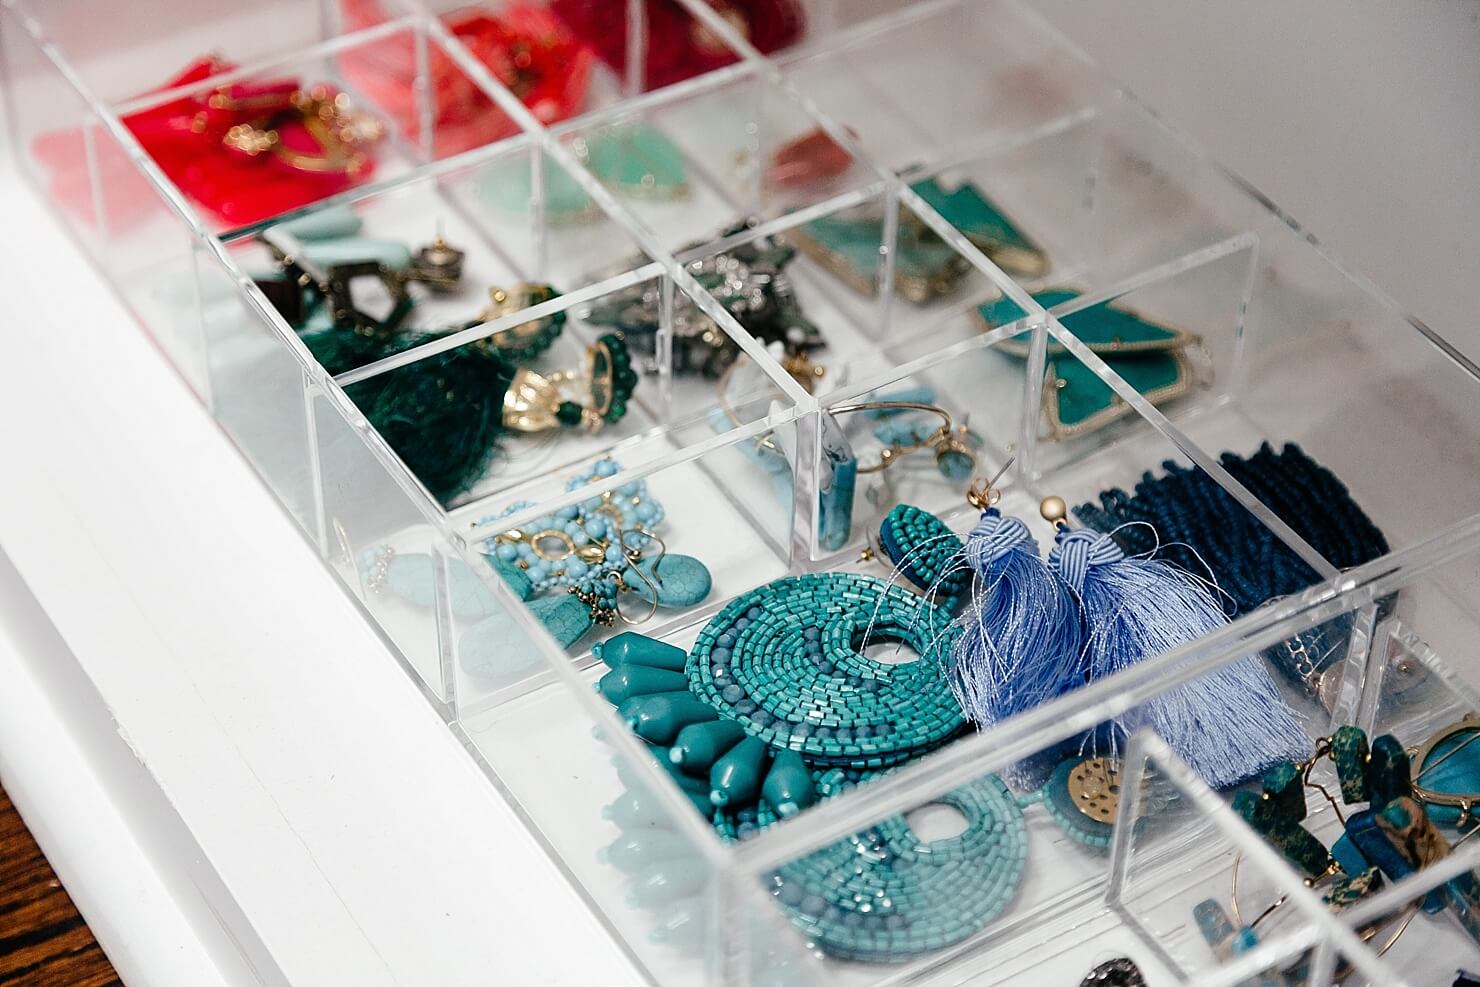 brighton keller new home closet reveal jewelry organization